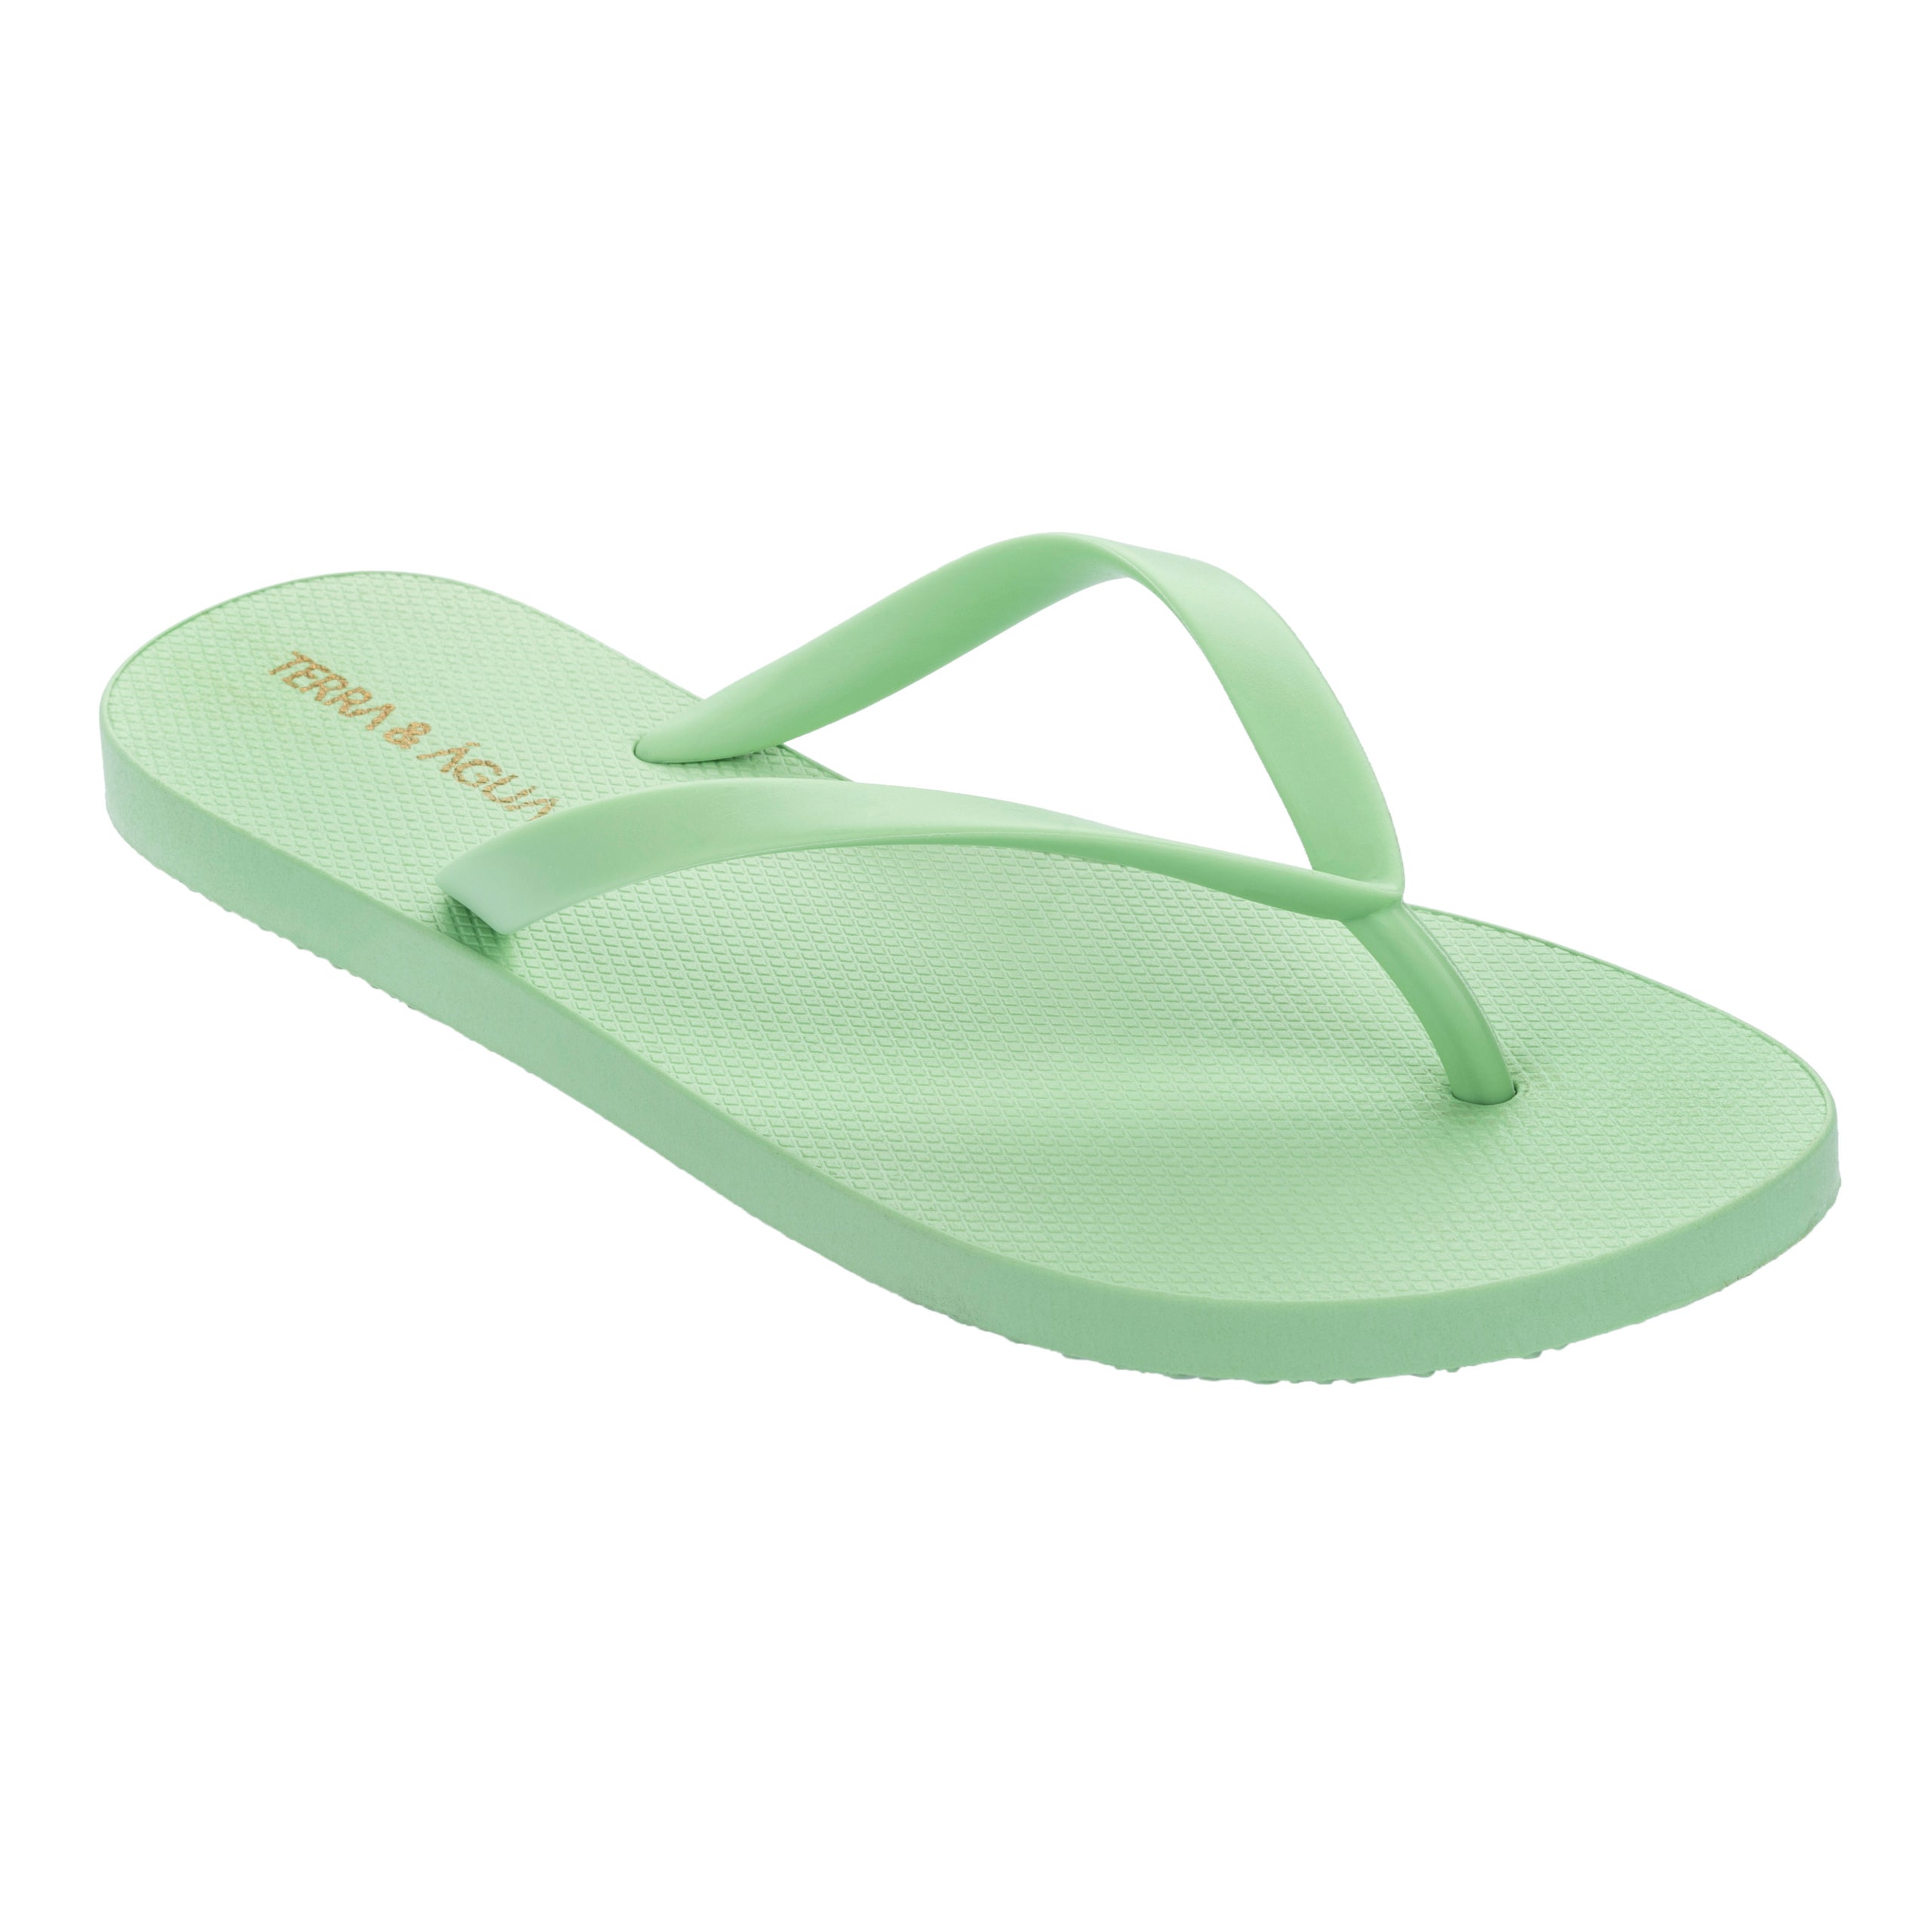 Mint Green Flip Flops Best Sale | bellvalefarms.com